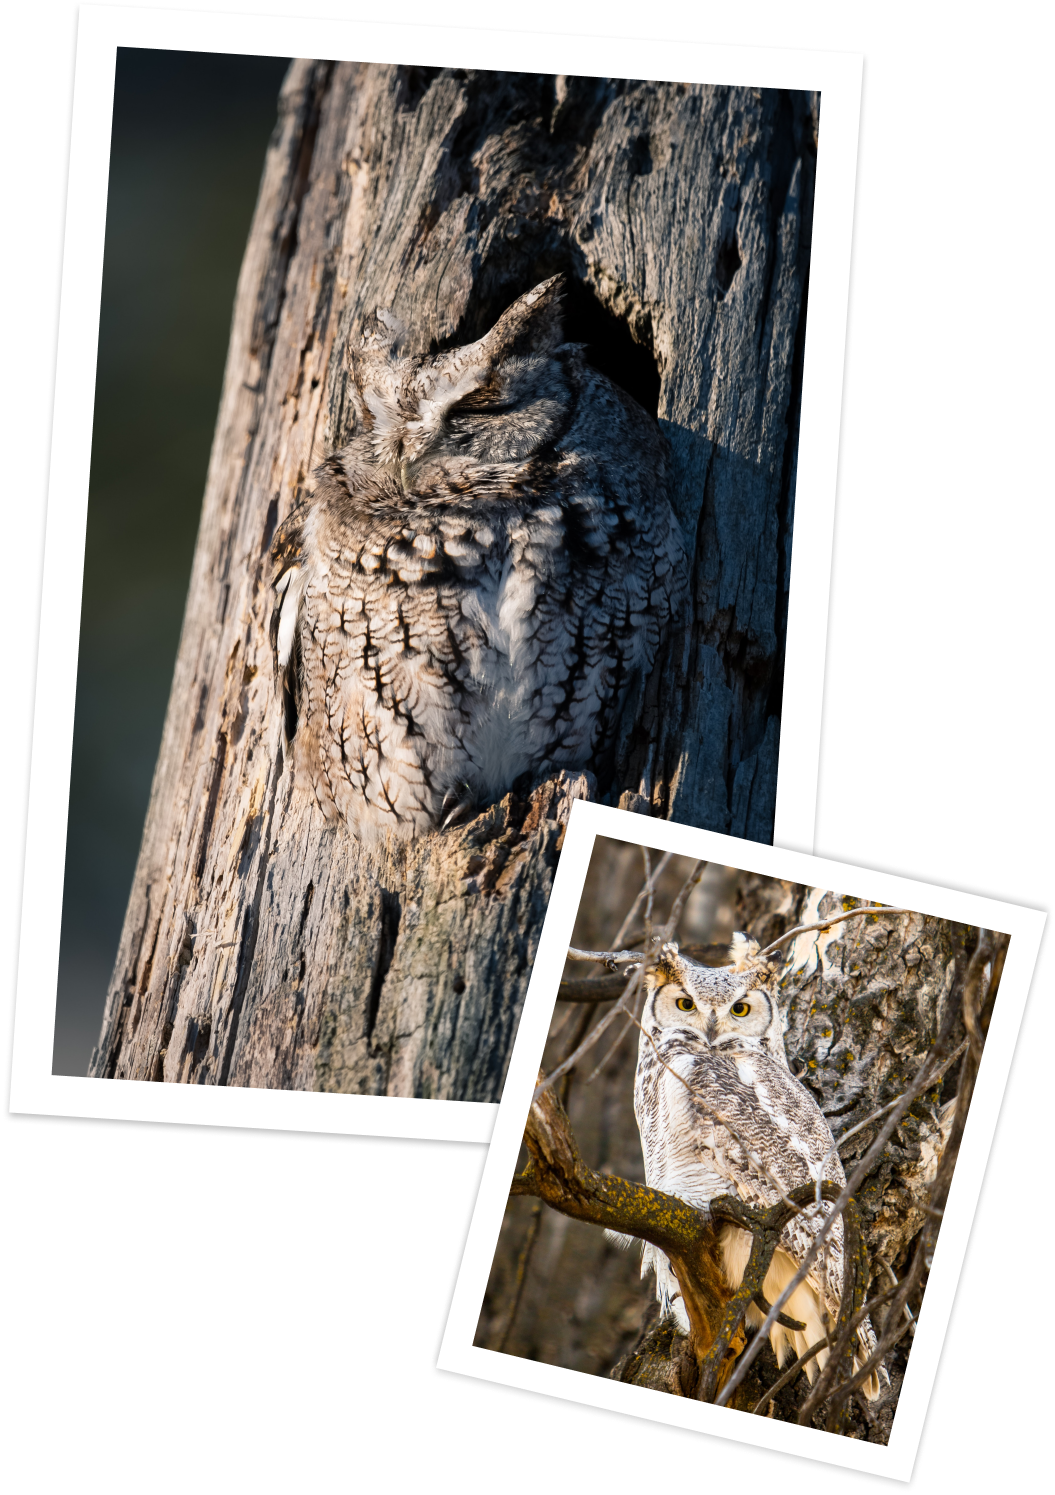 Photos of owls